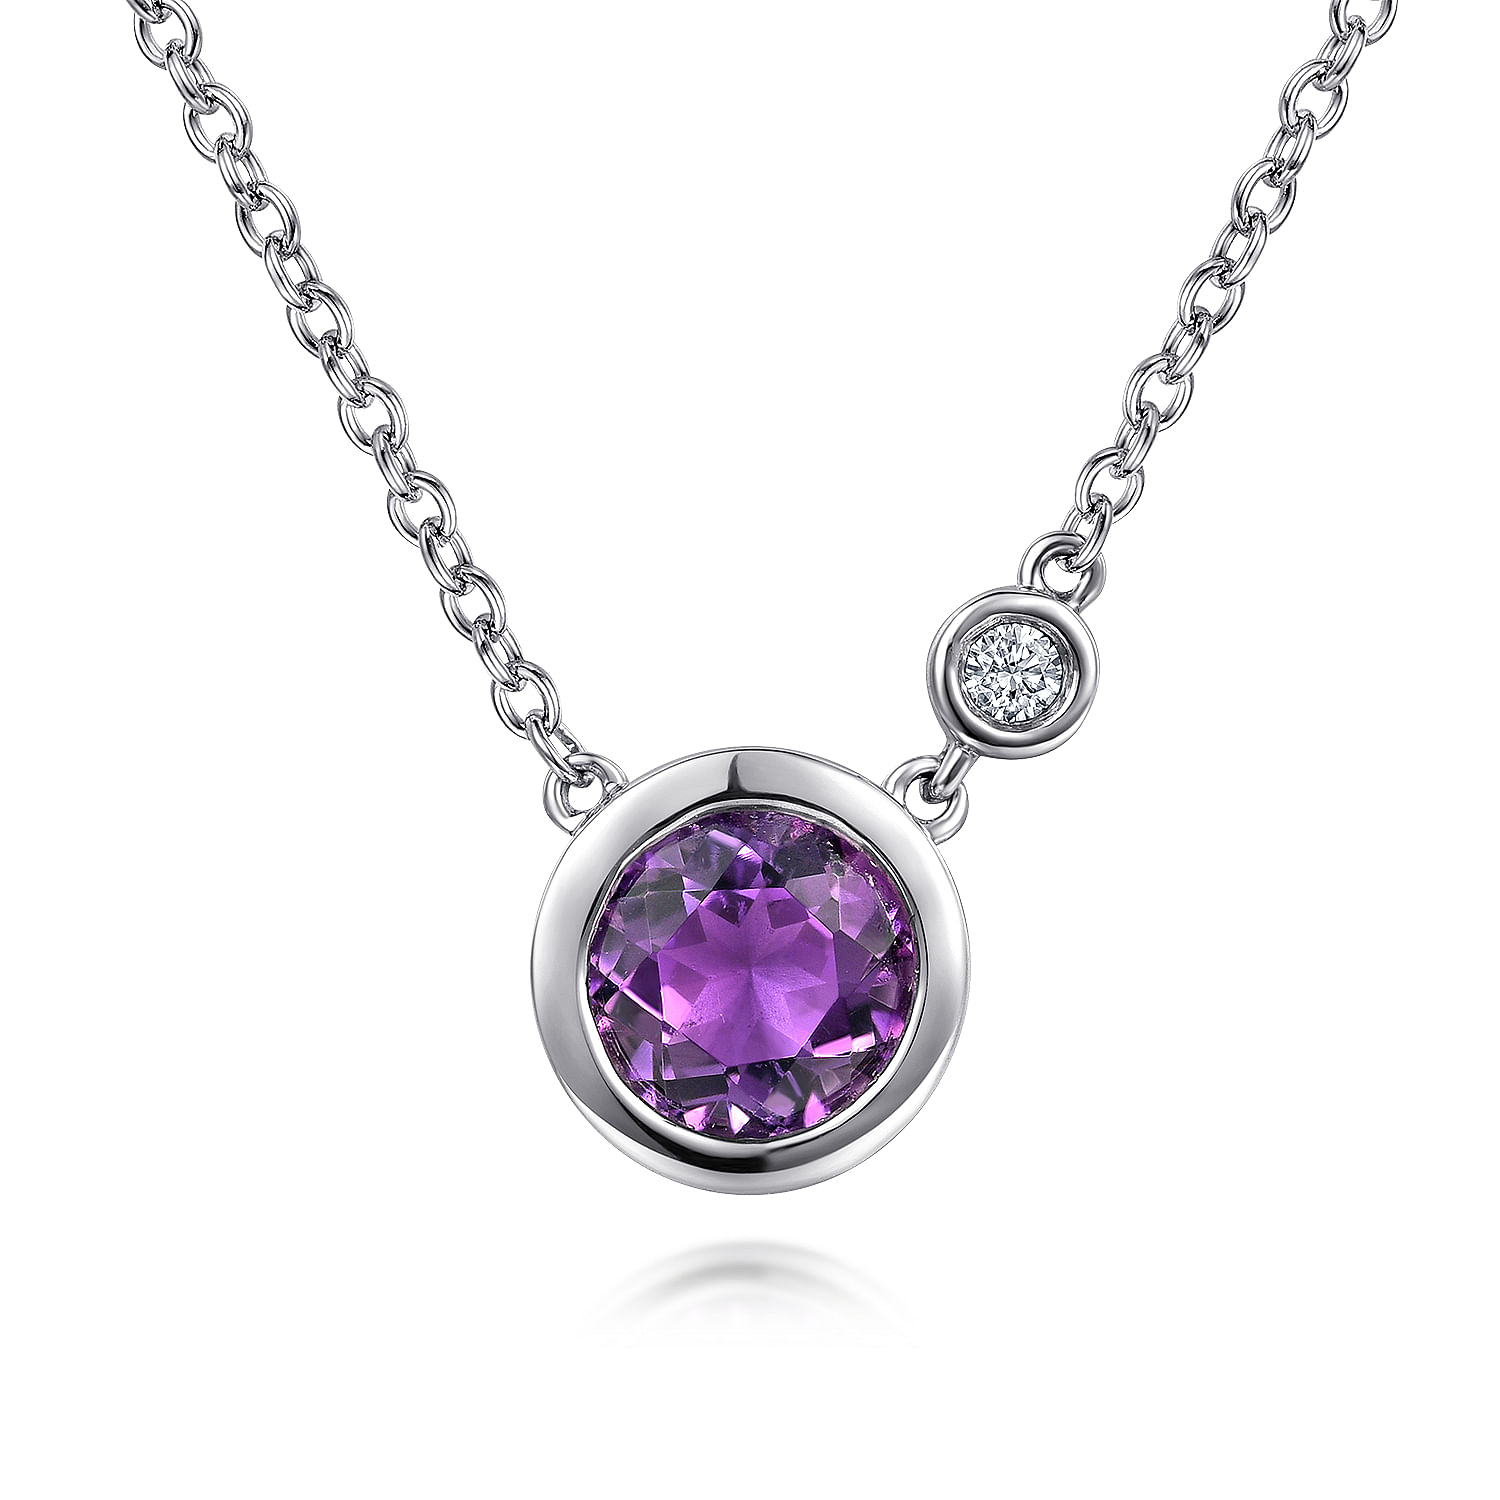 925 Sterling Silver Amethyst and Diamond Pendant Necklace W Bezel Set